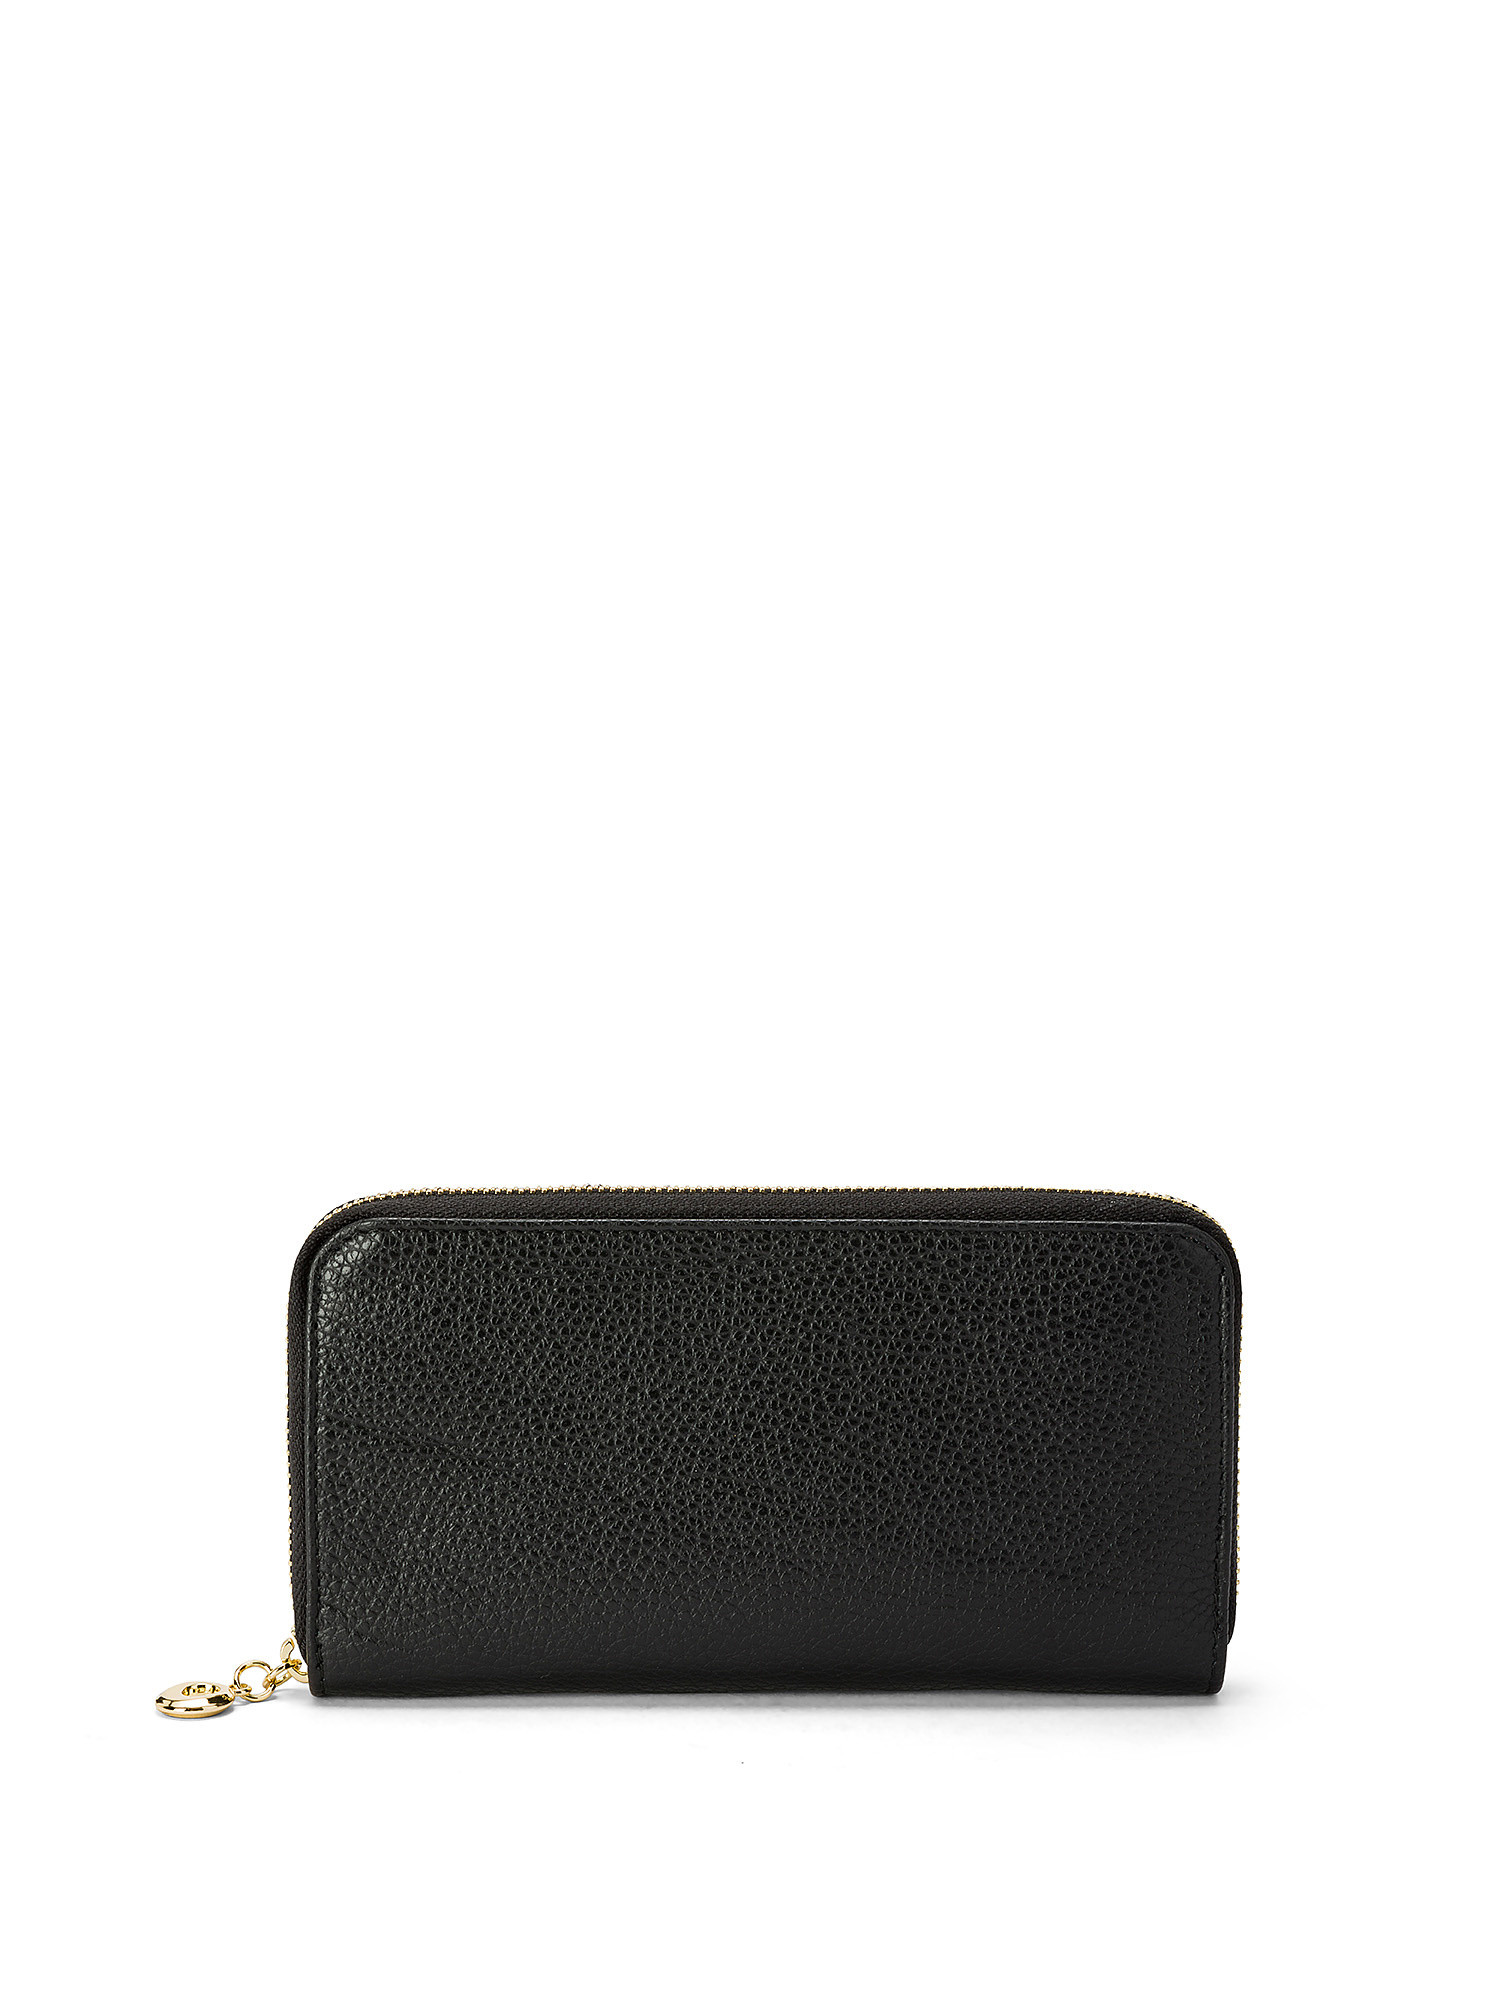 Koan - Genuine leather wallet with zip, Black, large image number 0